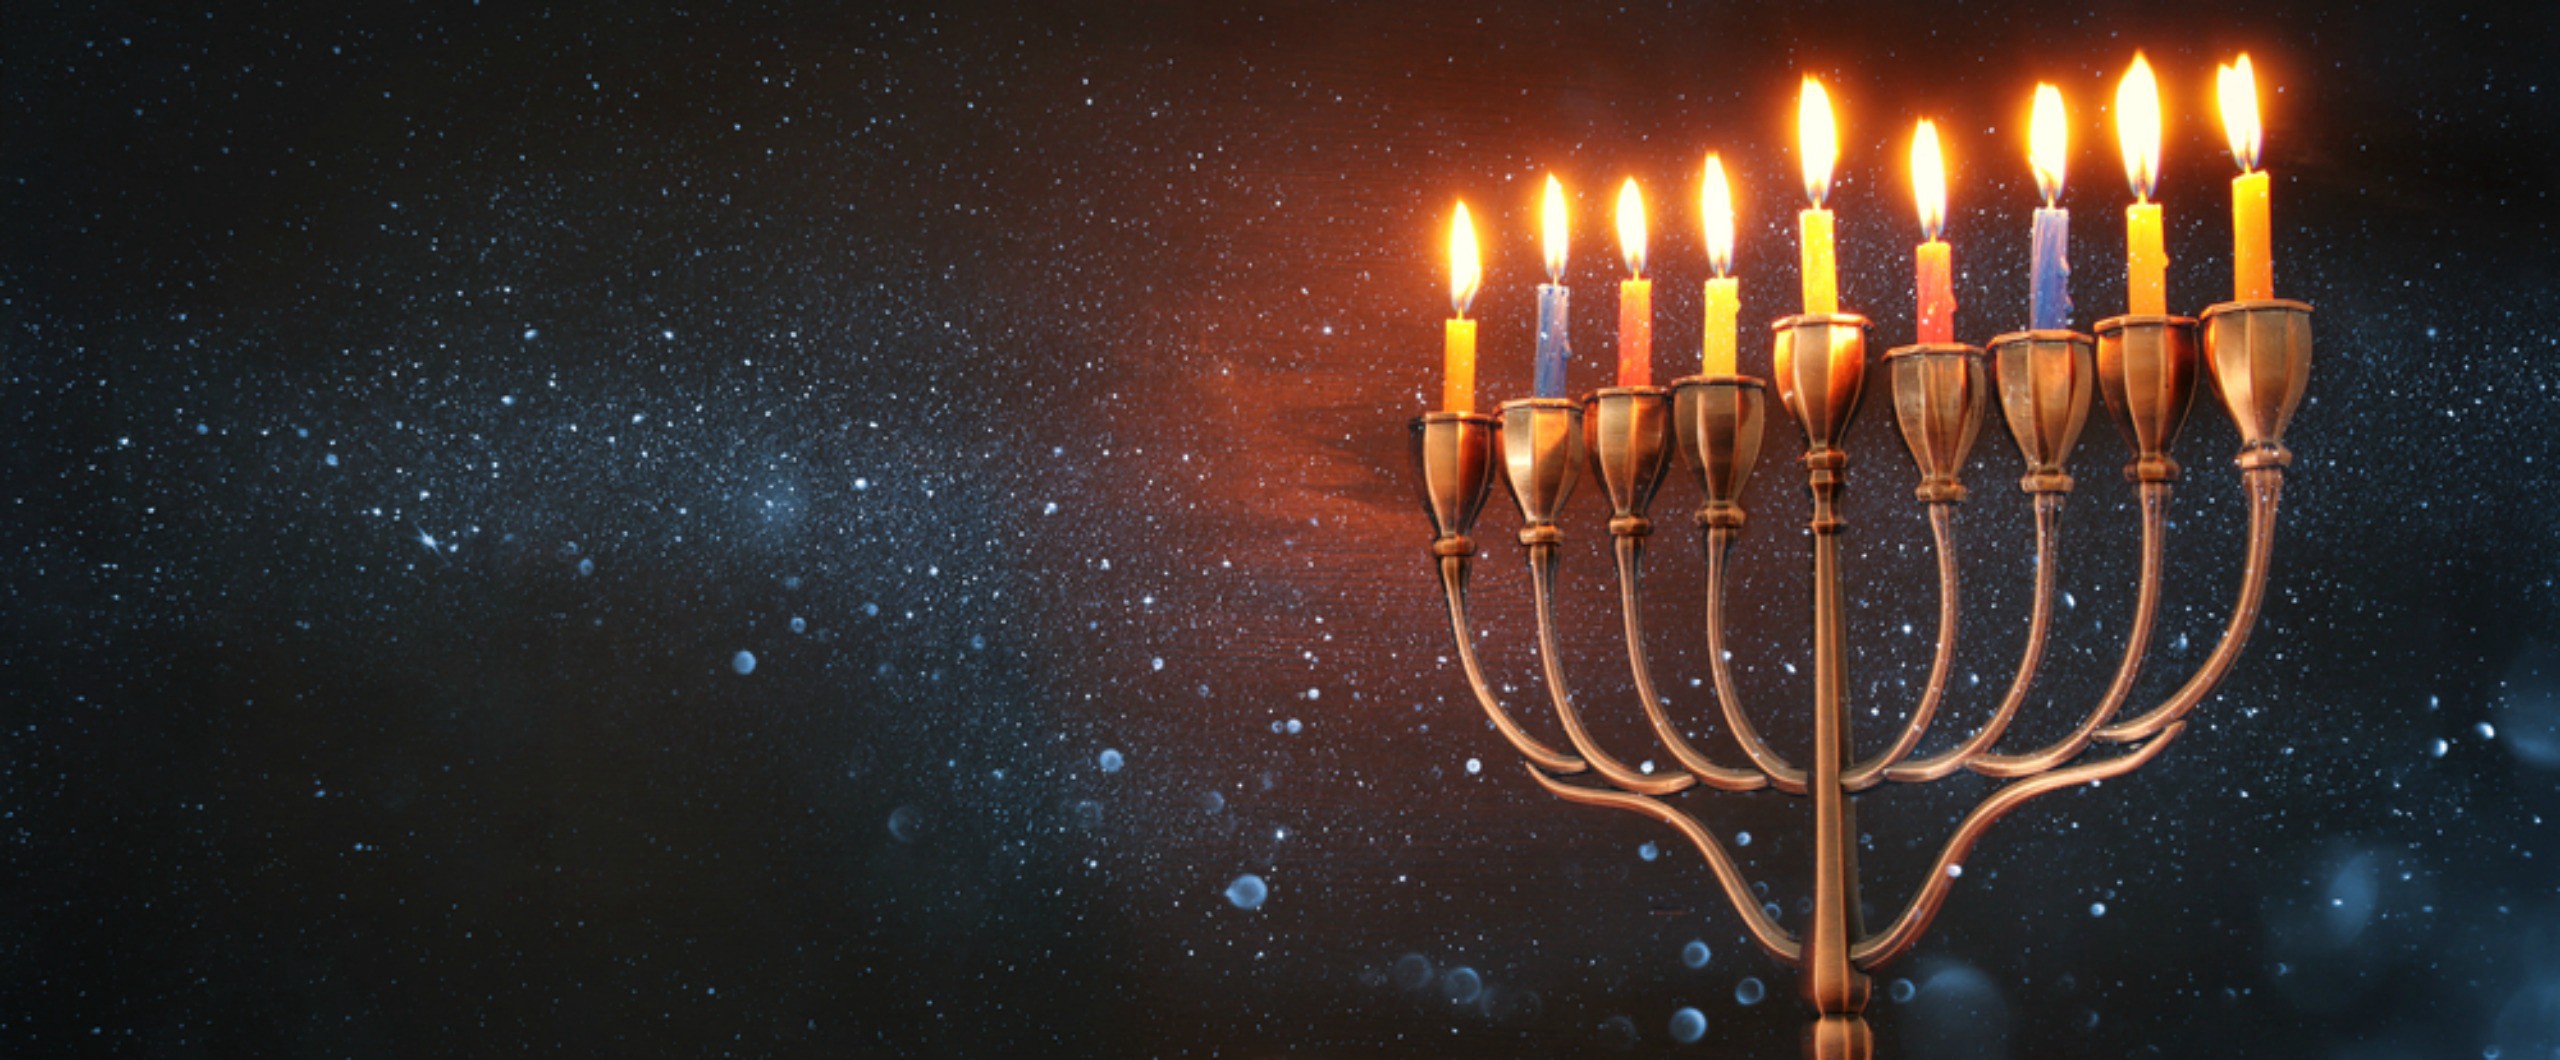 Hanukkah: The Light of Love